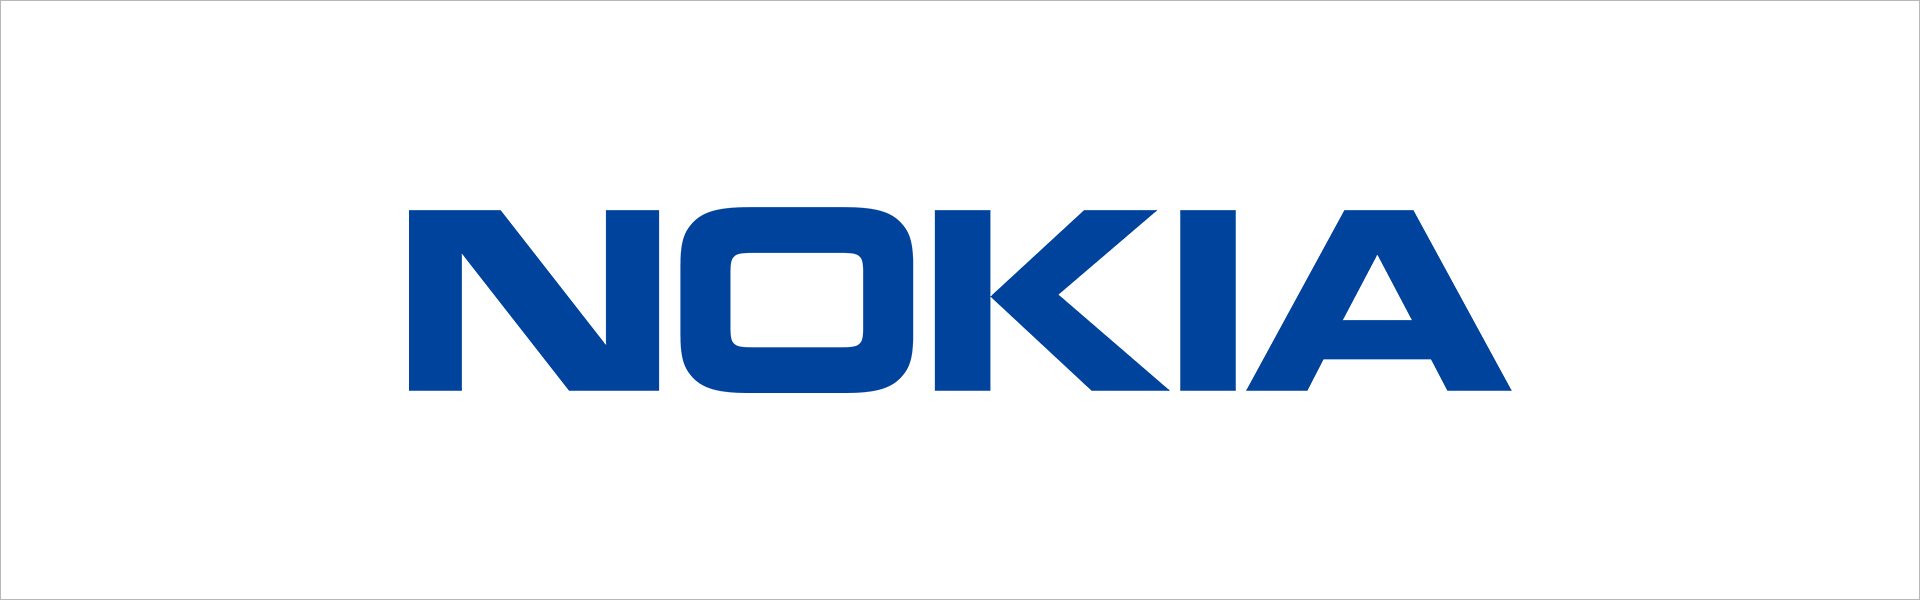 Nokia 3310 (2017), Dual SIM, (LT, LV, EE) Warm Red Nokia